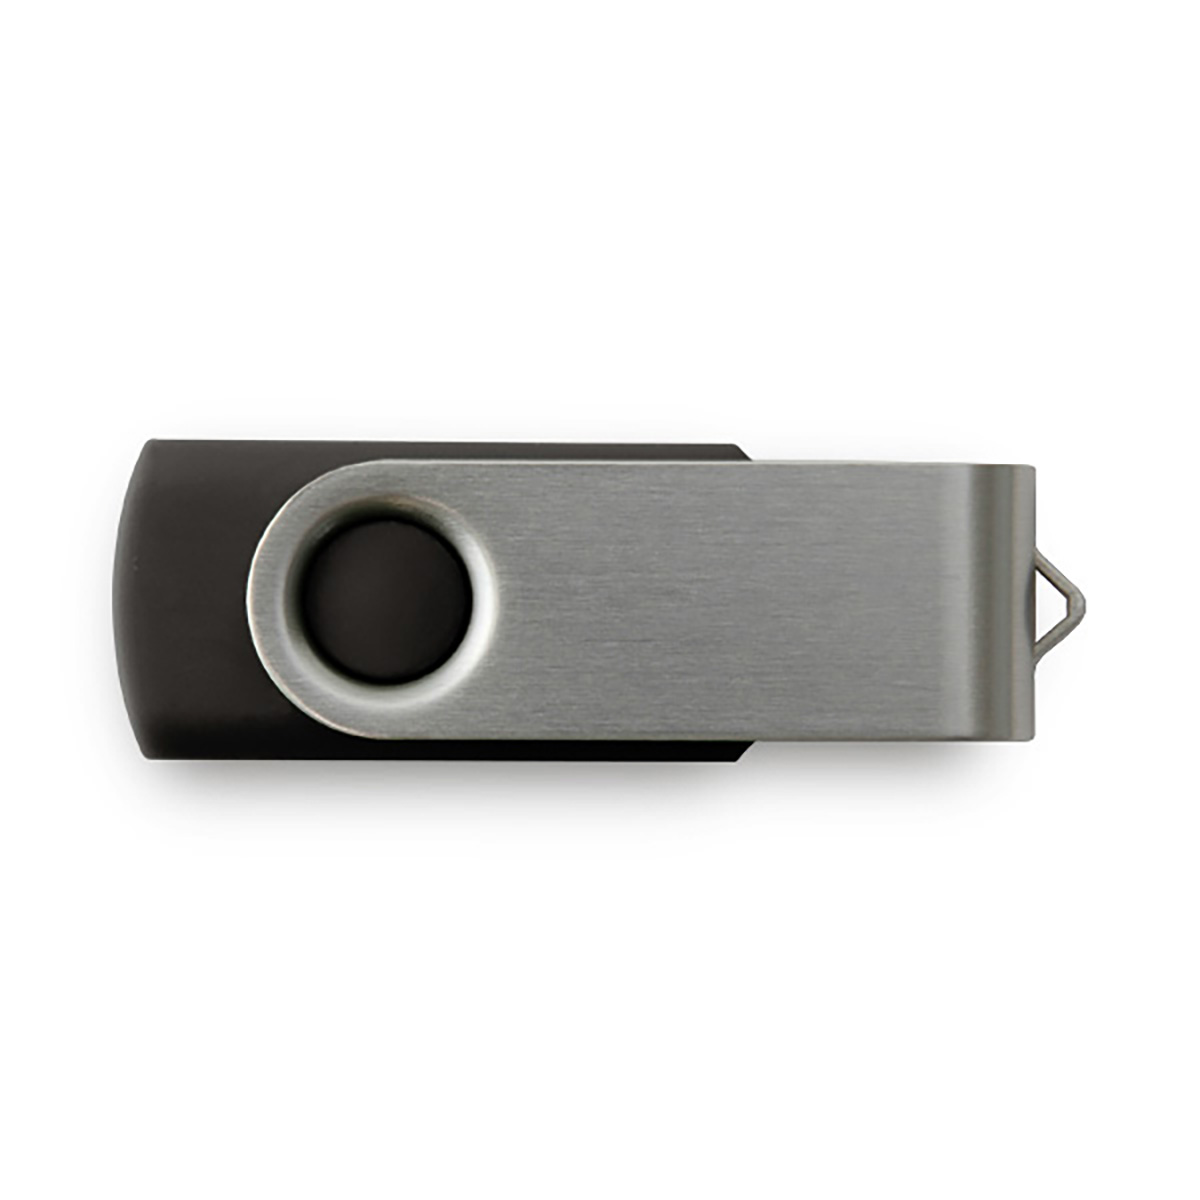 Black Northlake QuickShip Swivel USB Drive - 2GB